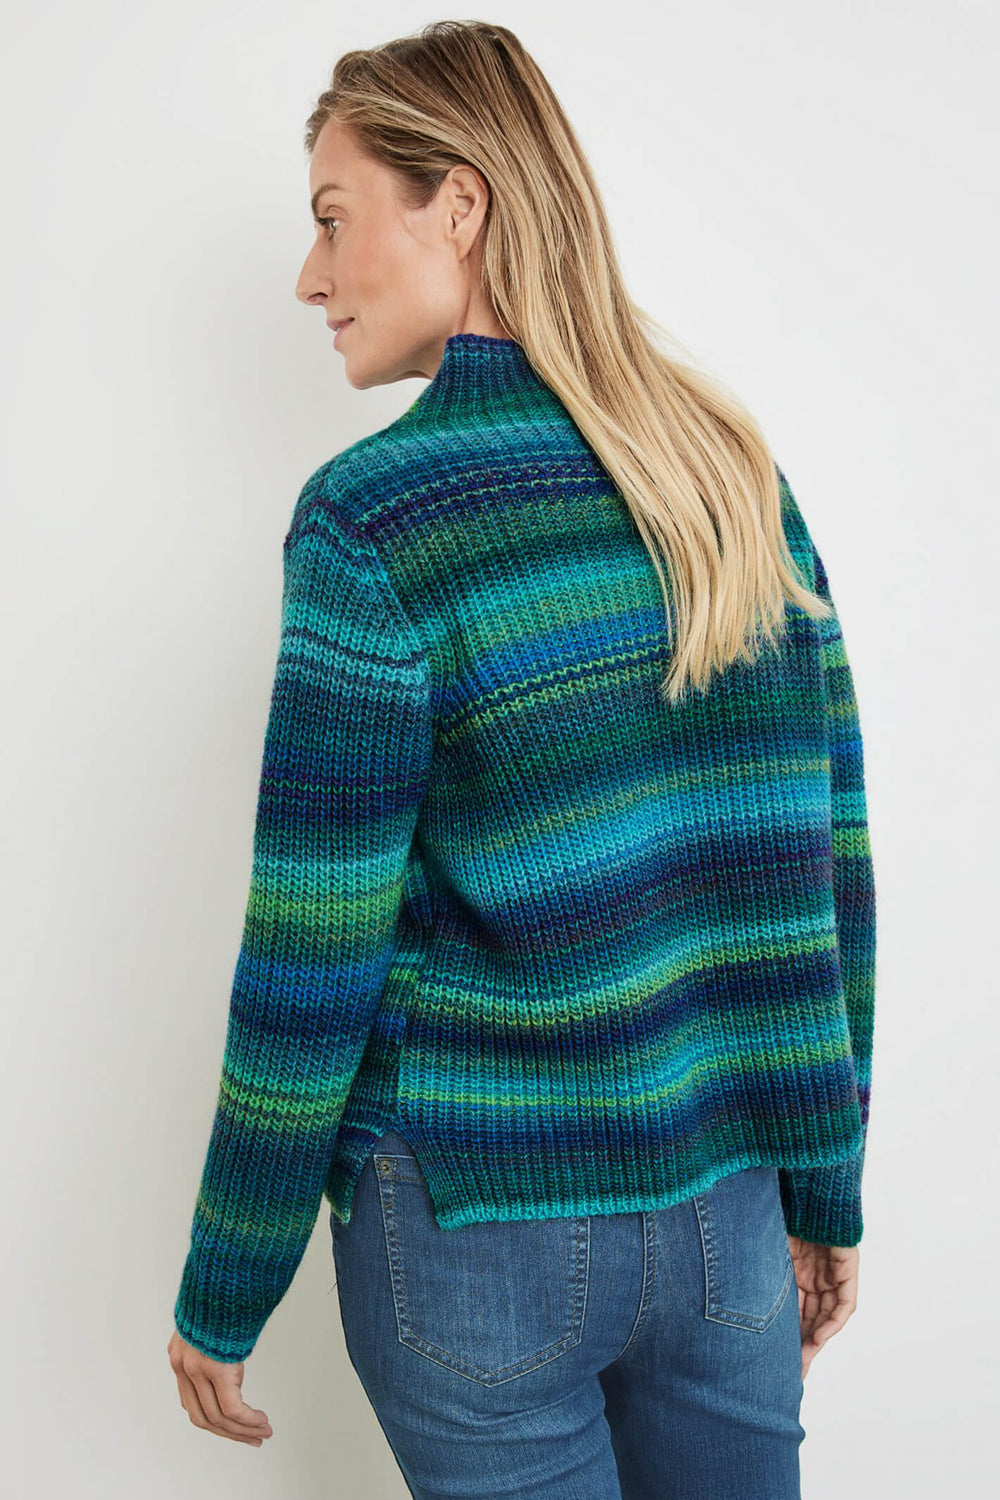 Gerry Weber 271039 Blue & Green Wool Blend Knitted Jumper - Experience Boutique